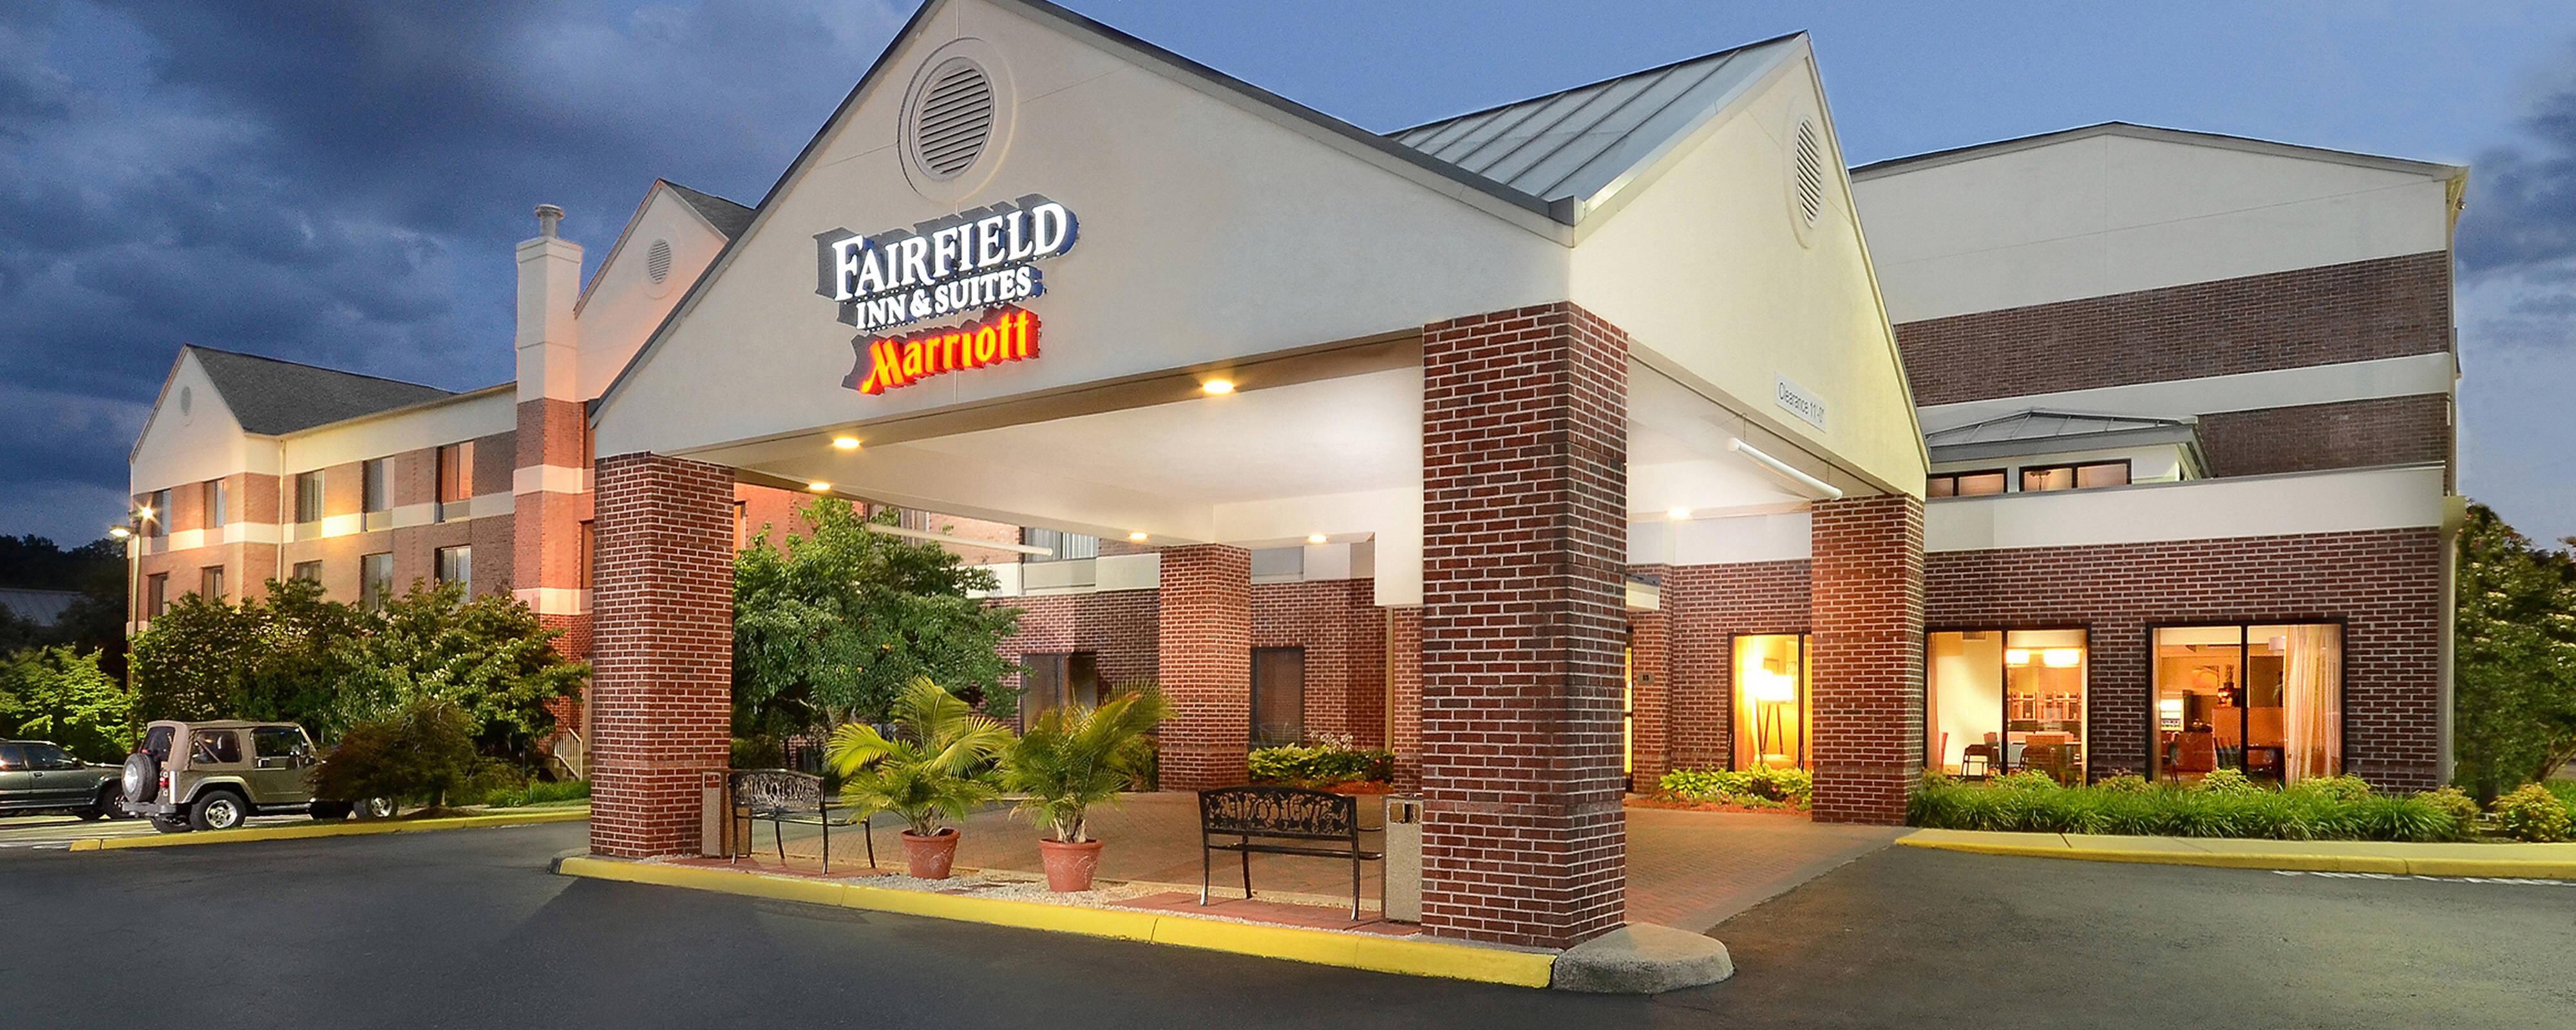 Fairfield by Marriott Charlottesville Hotel on Route 29 near Monticello